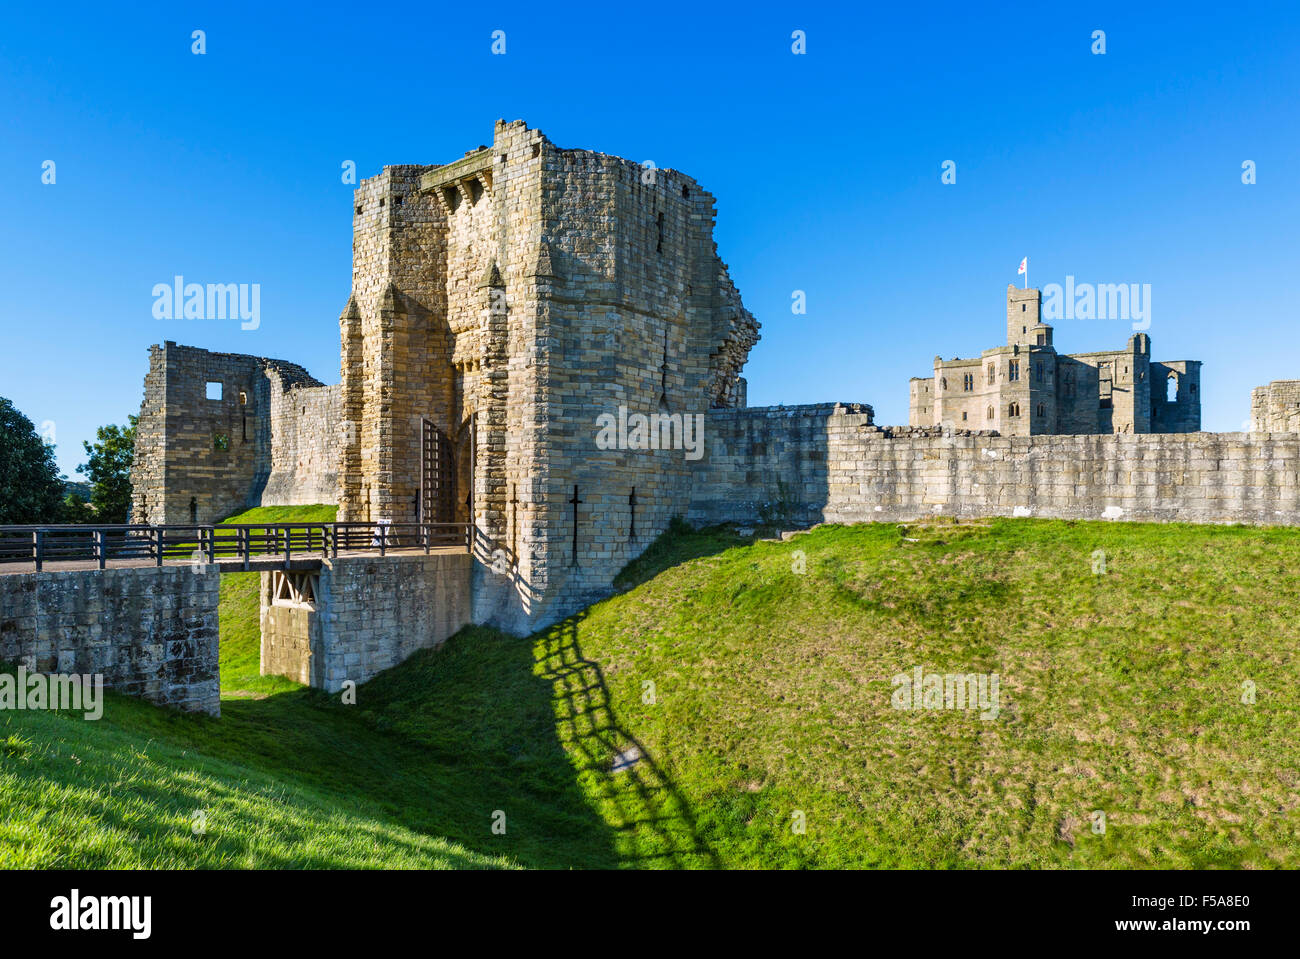 Moat and entrance to Warkworth Castle, Warkworth, Northumberland, England, UK Stock Photo